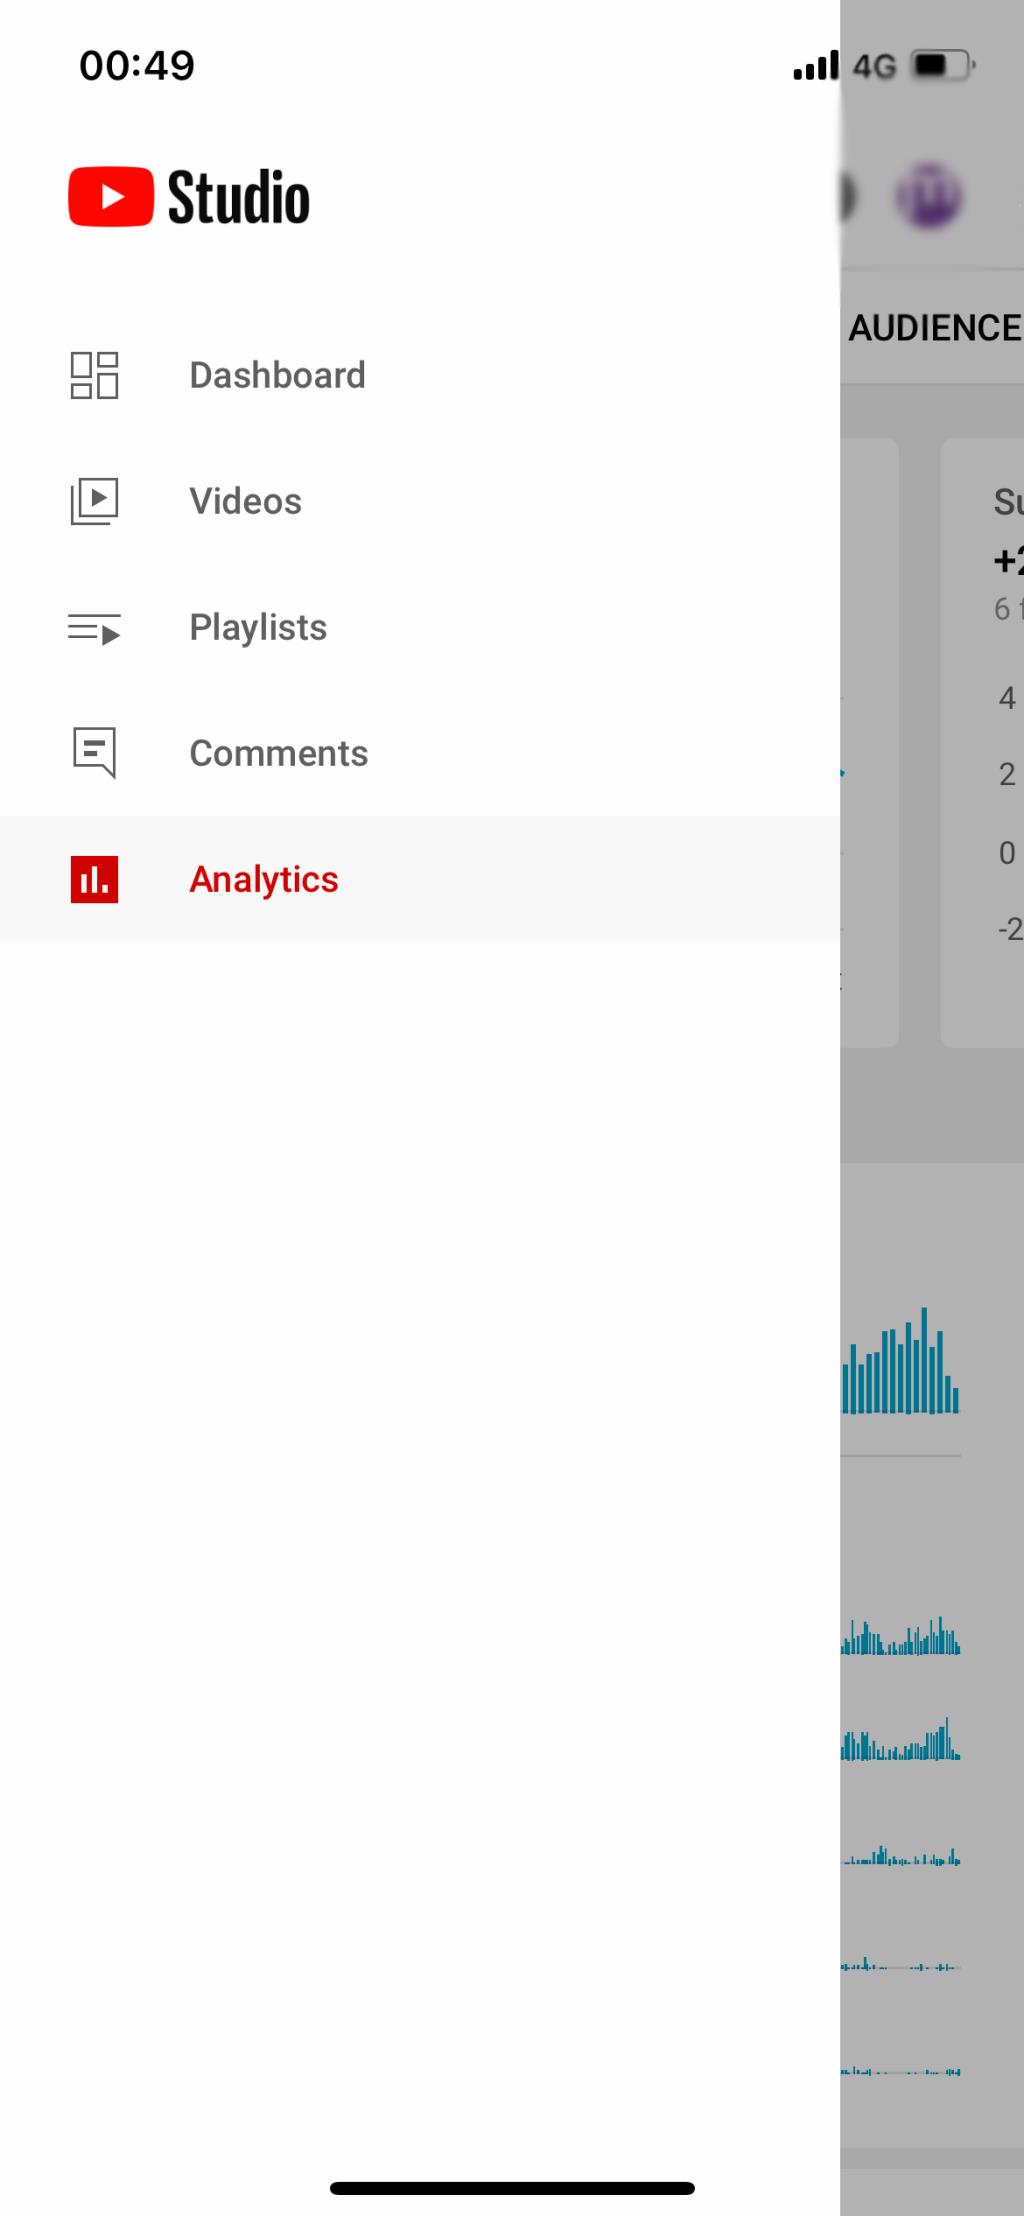 YouTubeStudioアプリを使用して収益と分析を確認する方法